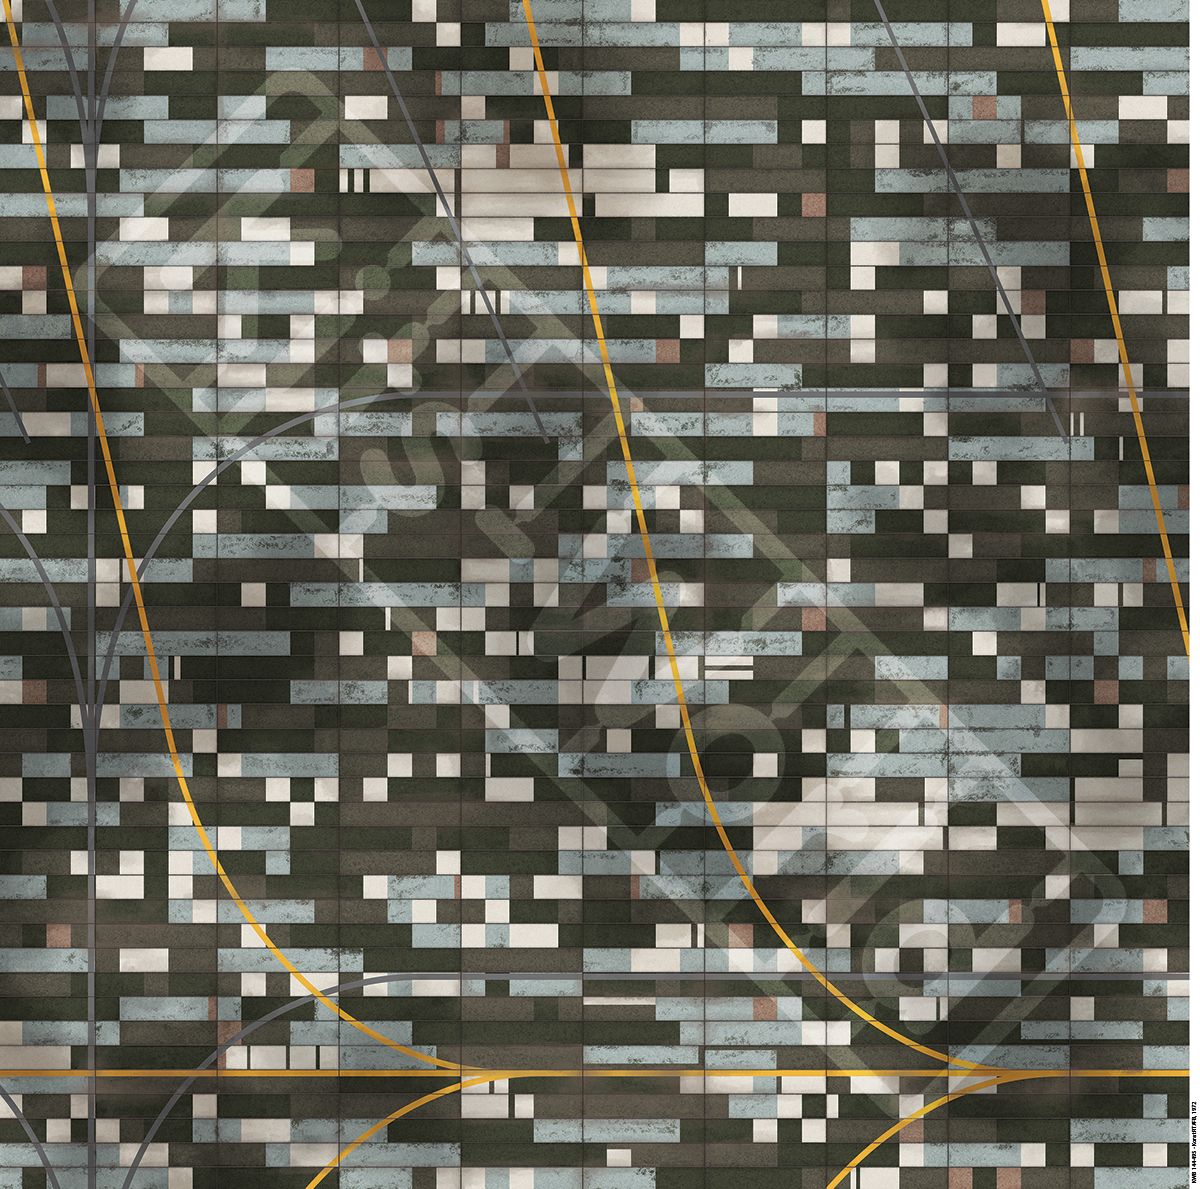 Kitsworld Diorama Adhesive Base 1:144th scale - Korat RTAFB- 1972 KWB 144-495 Korat RTAFB, 1972 GPS- 14º55’47.83” N  102º04’45.01” E (General location) 